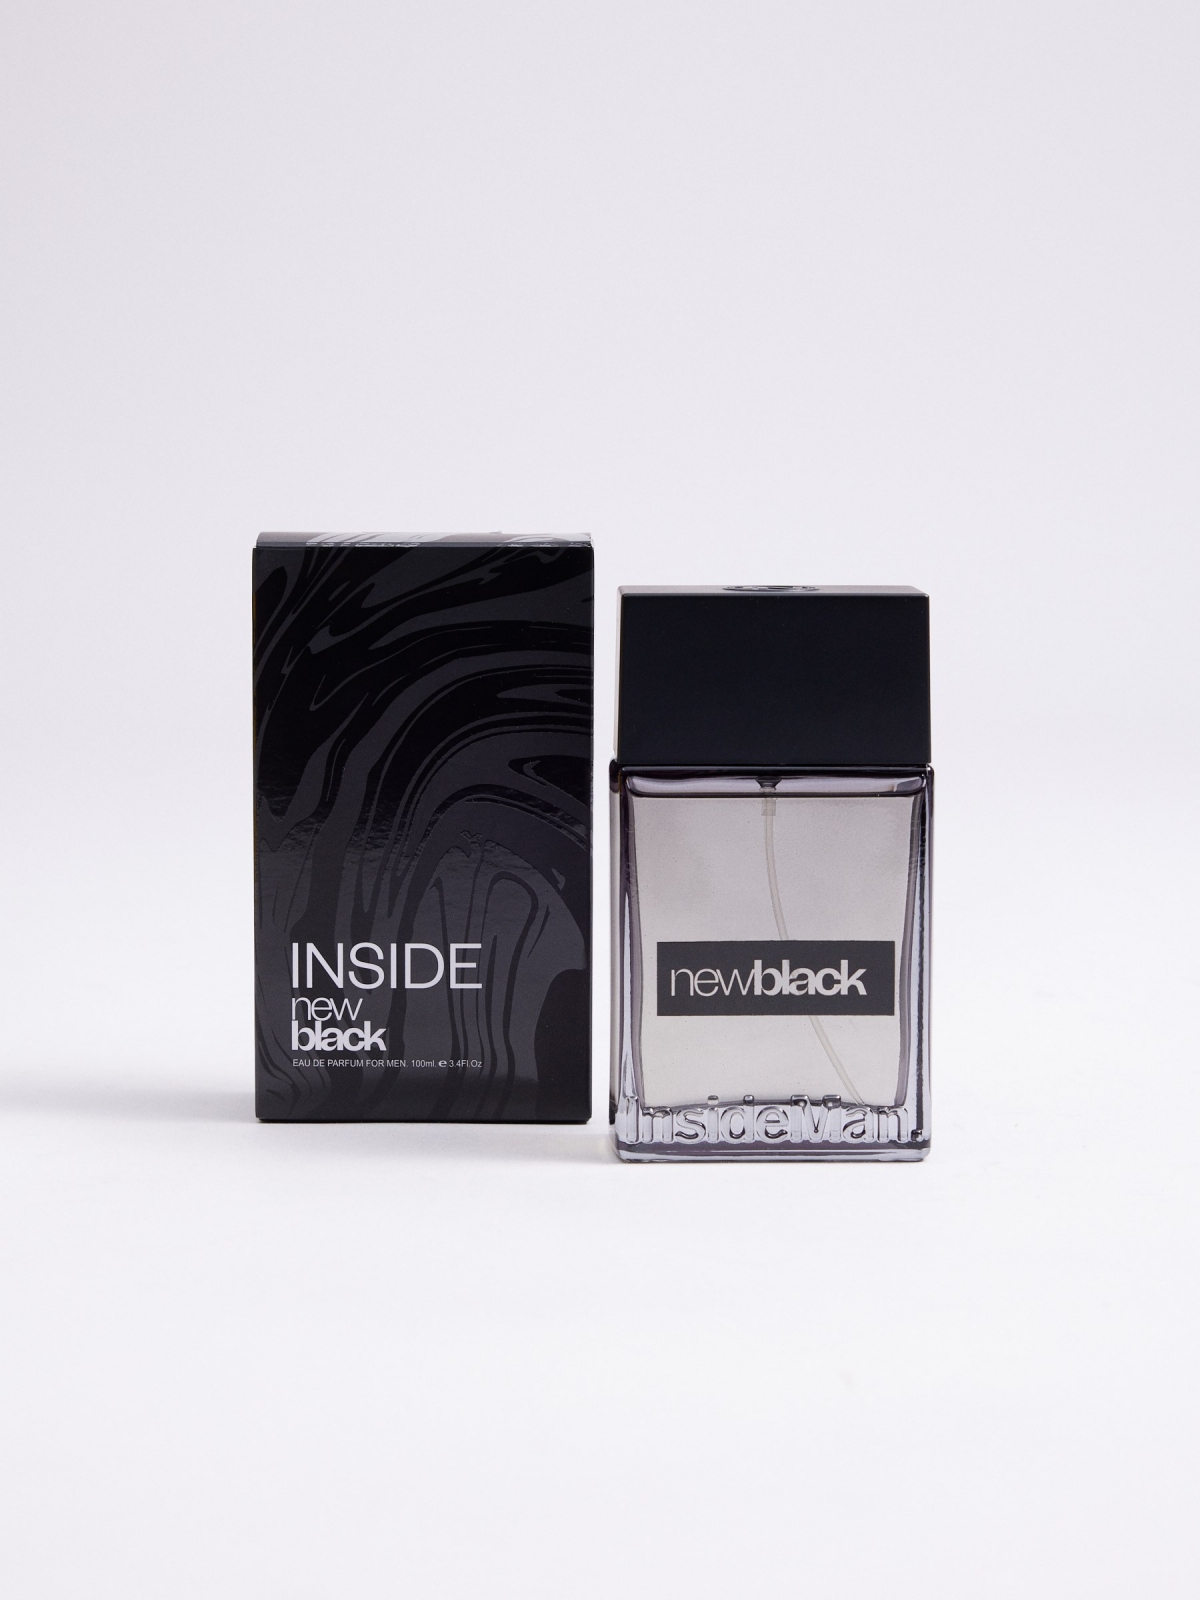 INSIDE new black perfume